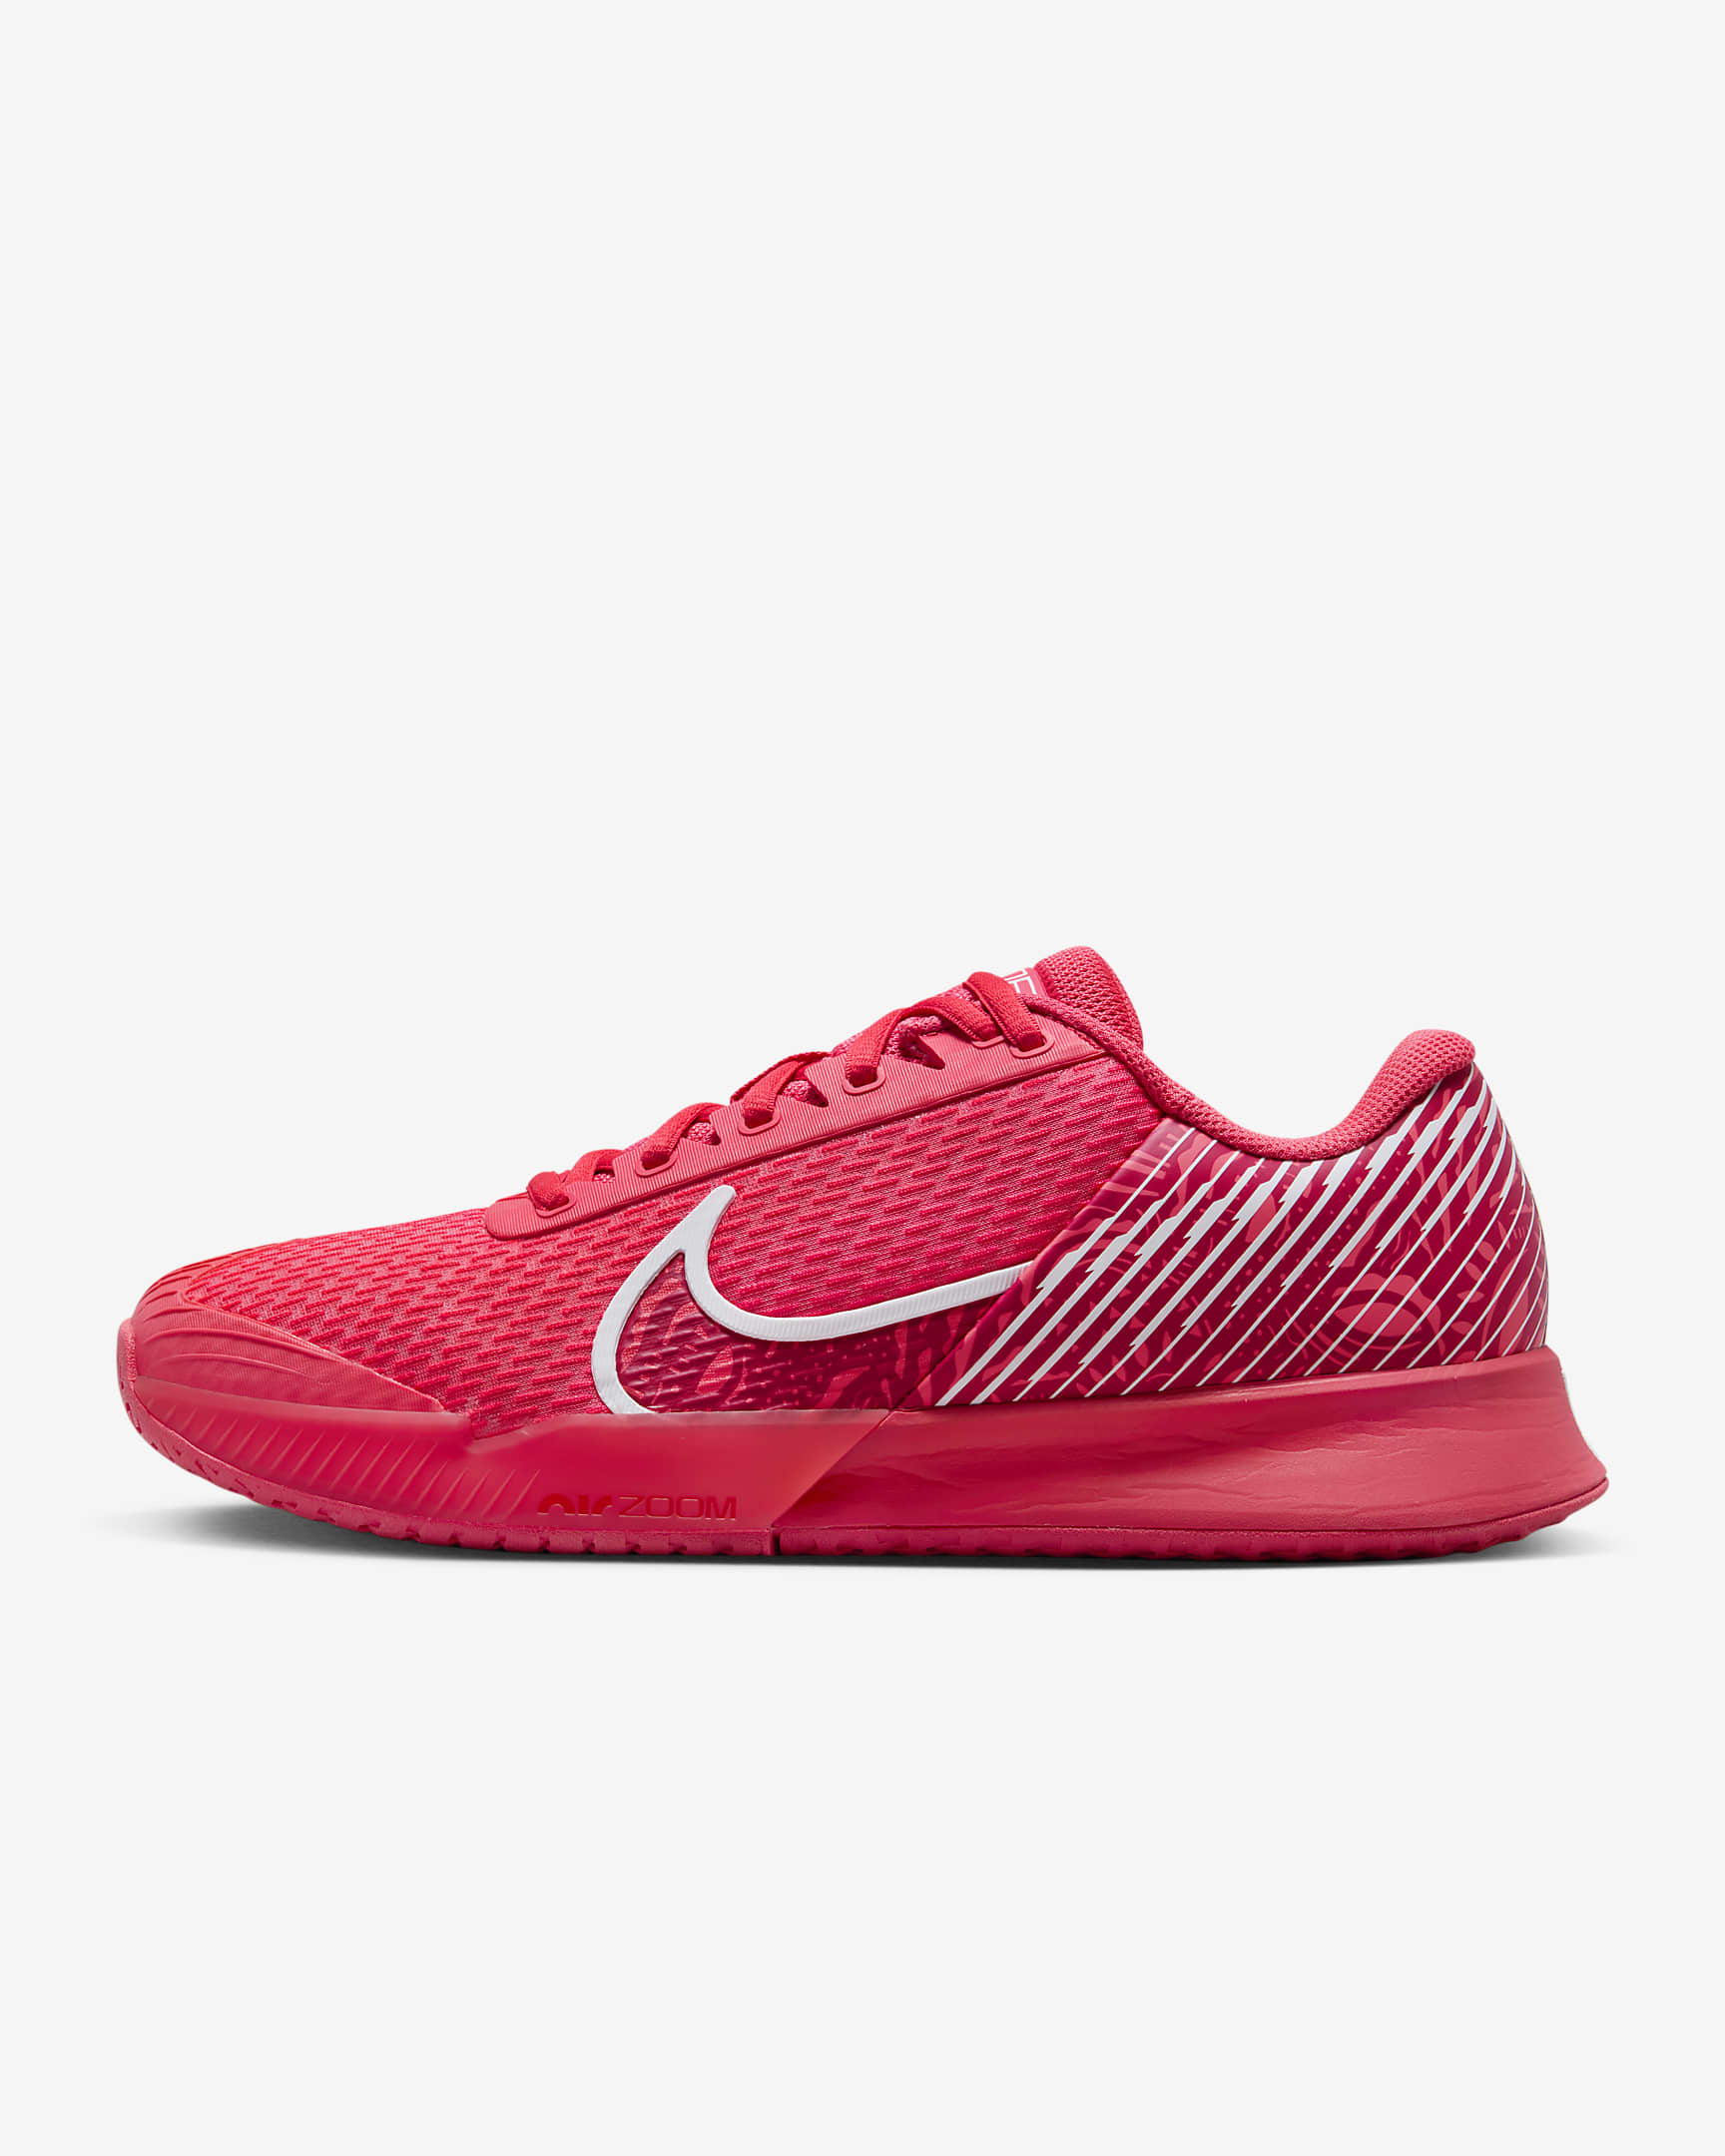 NikeCourt Air Zoom Vapor Pro 2 Men #39 s Hard Court Tennis Shoes Nike RO